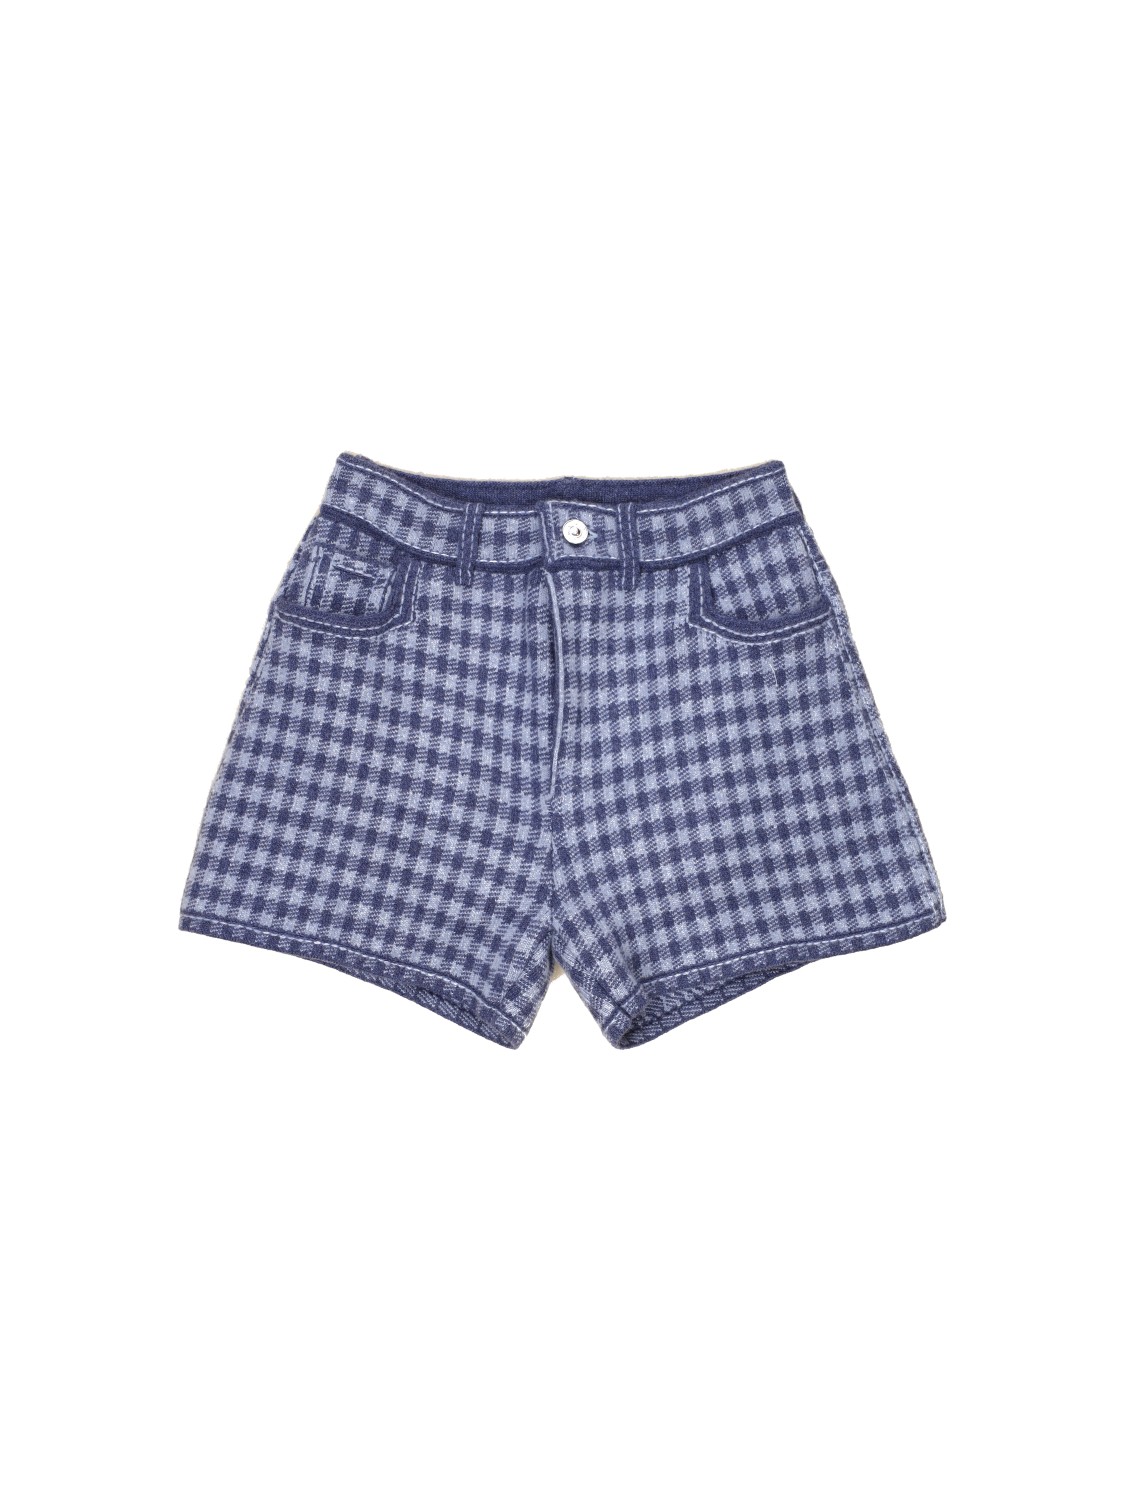 Denim gingham shorts - checkered cashmere shorts 